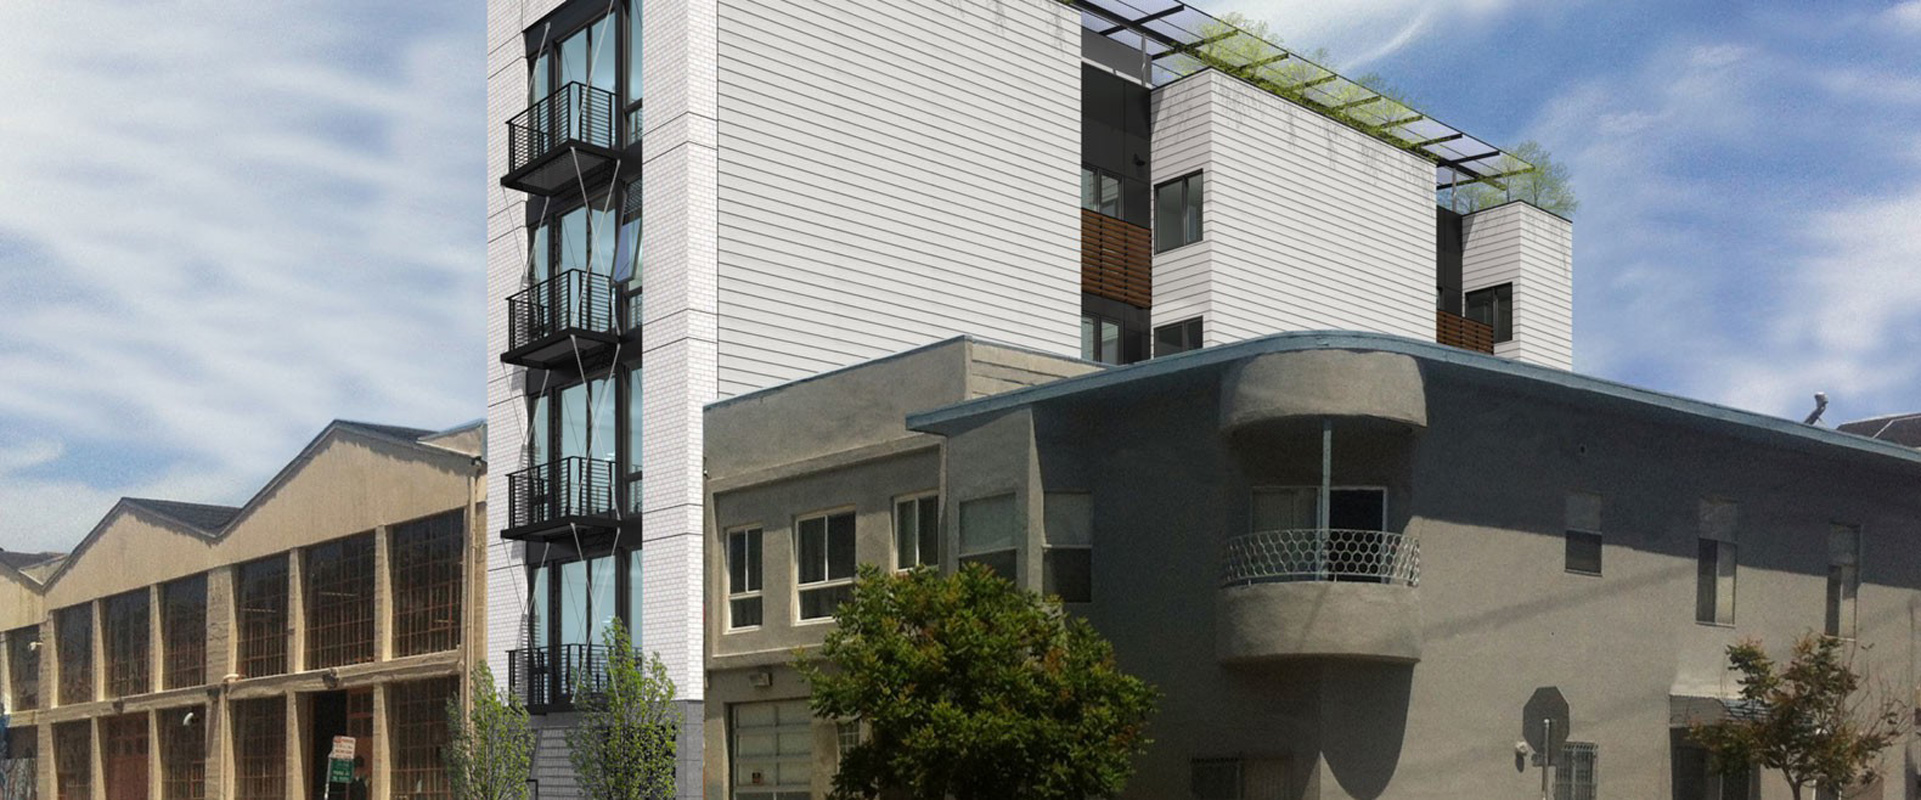 il condominio Sol-Lux Alpha progettato da Riyad Ghannam a San Francisco